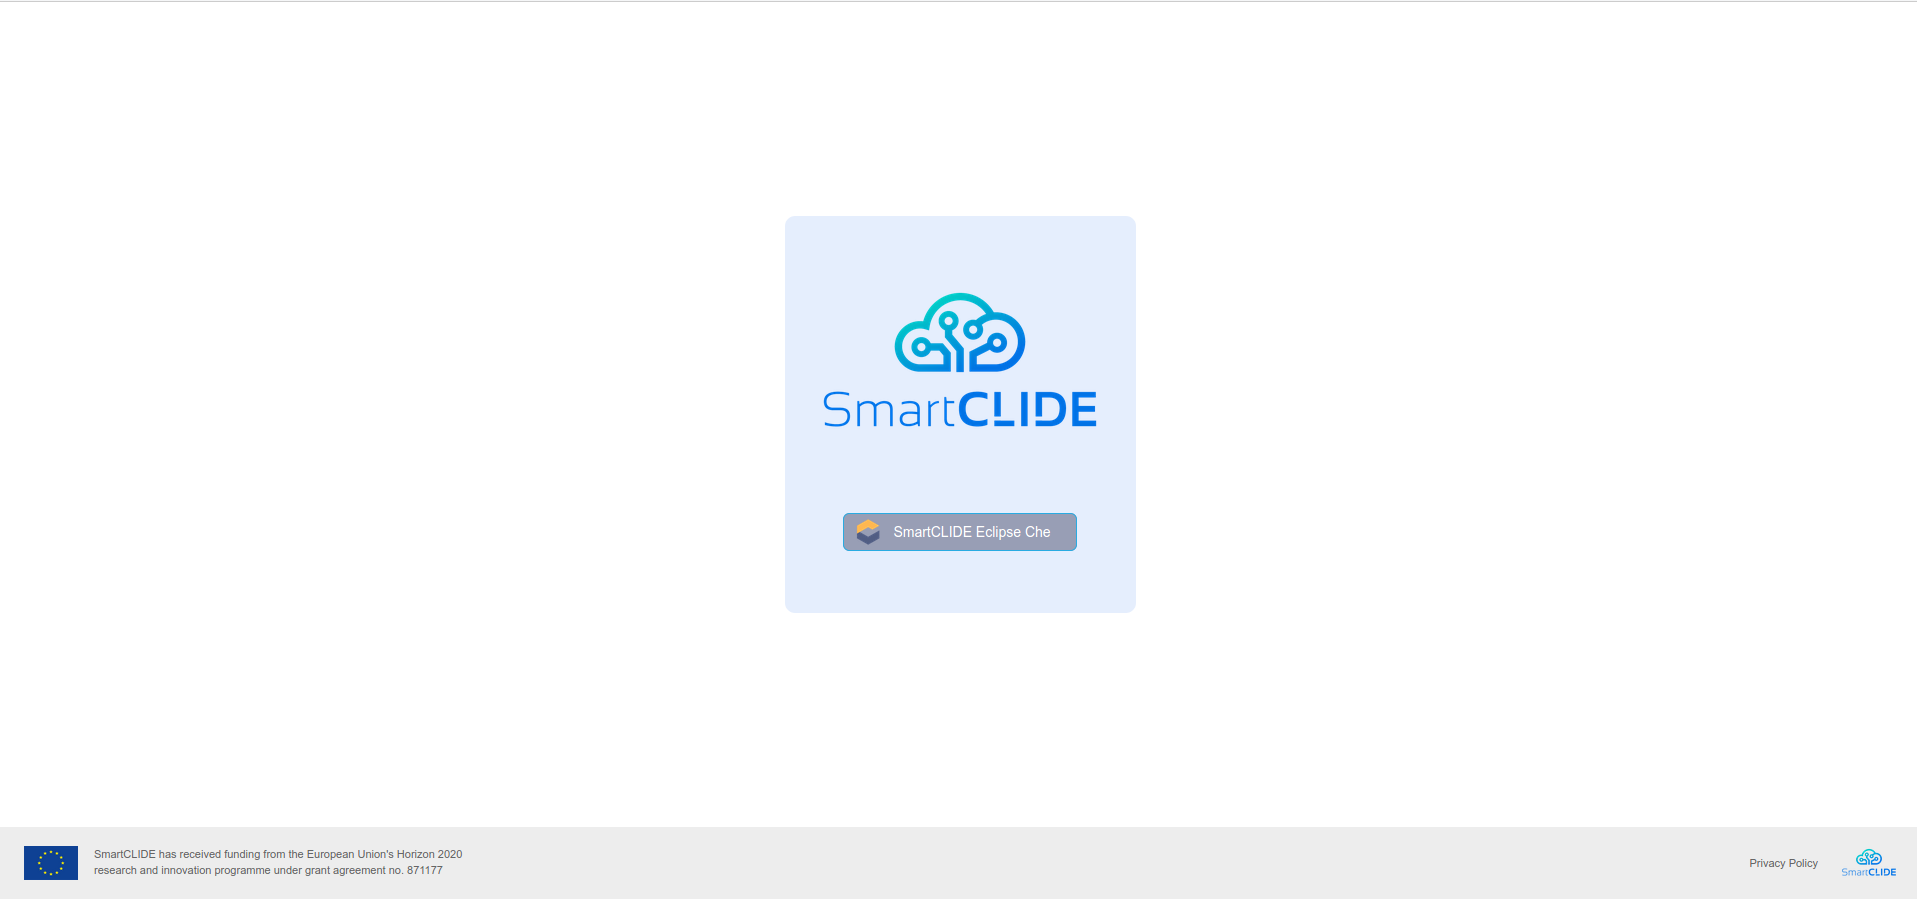 The SmartCLIDE IDE Landing Page